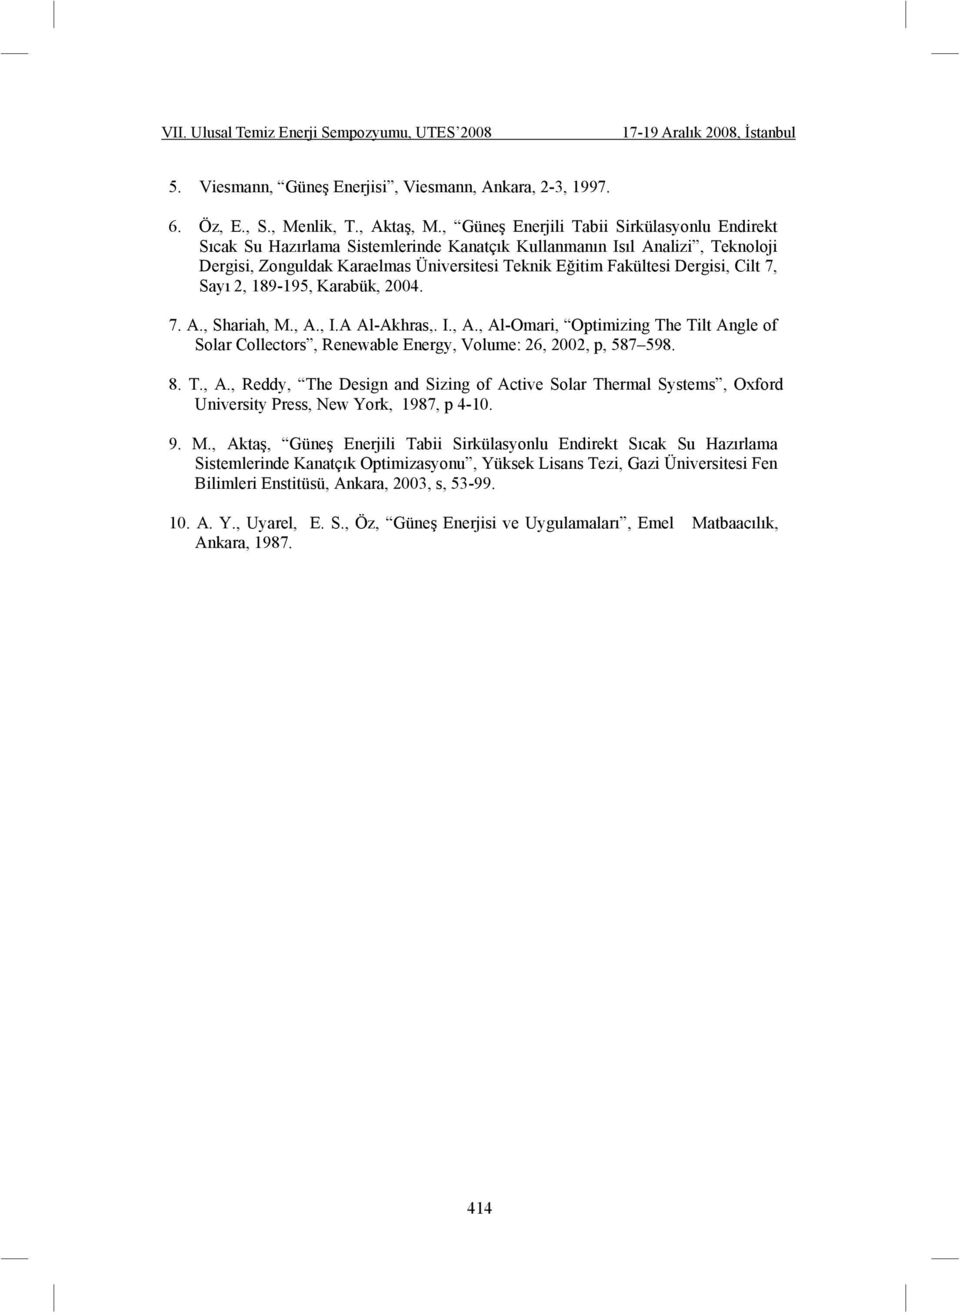 Cilt 7, Sayı 2, 189-195, Karabük, 2004. 7. A., Shariah, M., A., I.A Al-Akhras,. I., A., Al-Omari, Optimizing The Tilt Angle of Solar Collectors, Renewable Energy, Volume: 26, 2002, p, 587 598. 8. T., A., Reddy, The Design and Sizing of Active Solar Thermal Systems, Oxford University Press, New York, 1987, p 4-10.